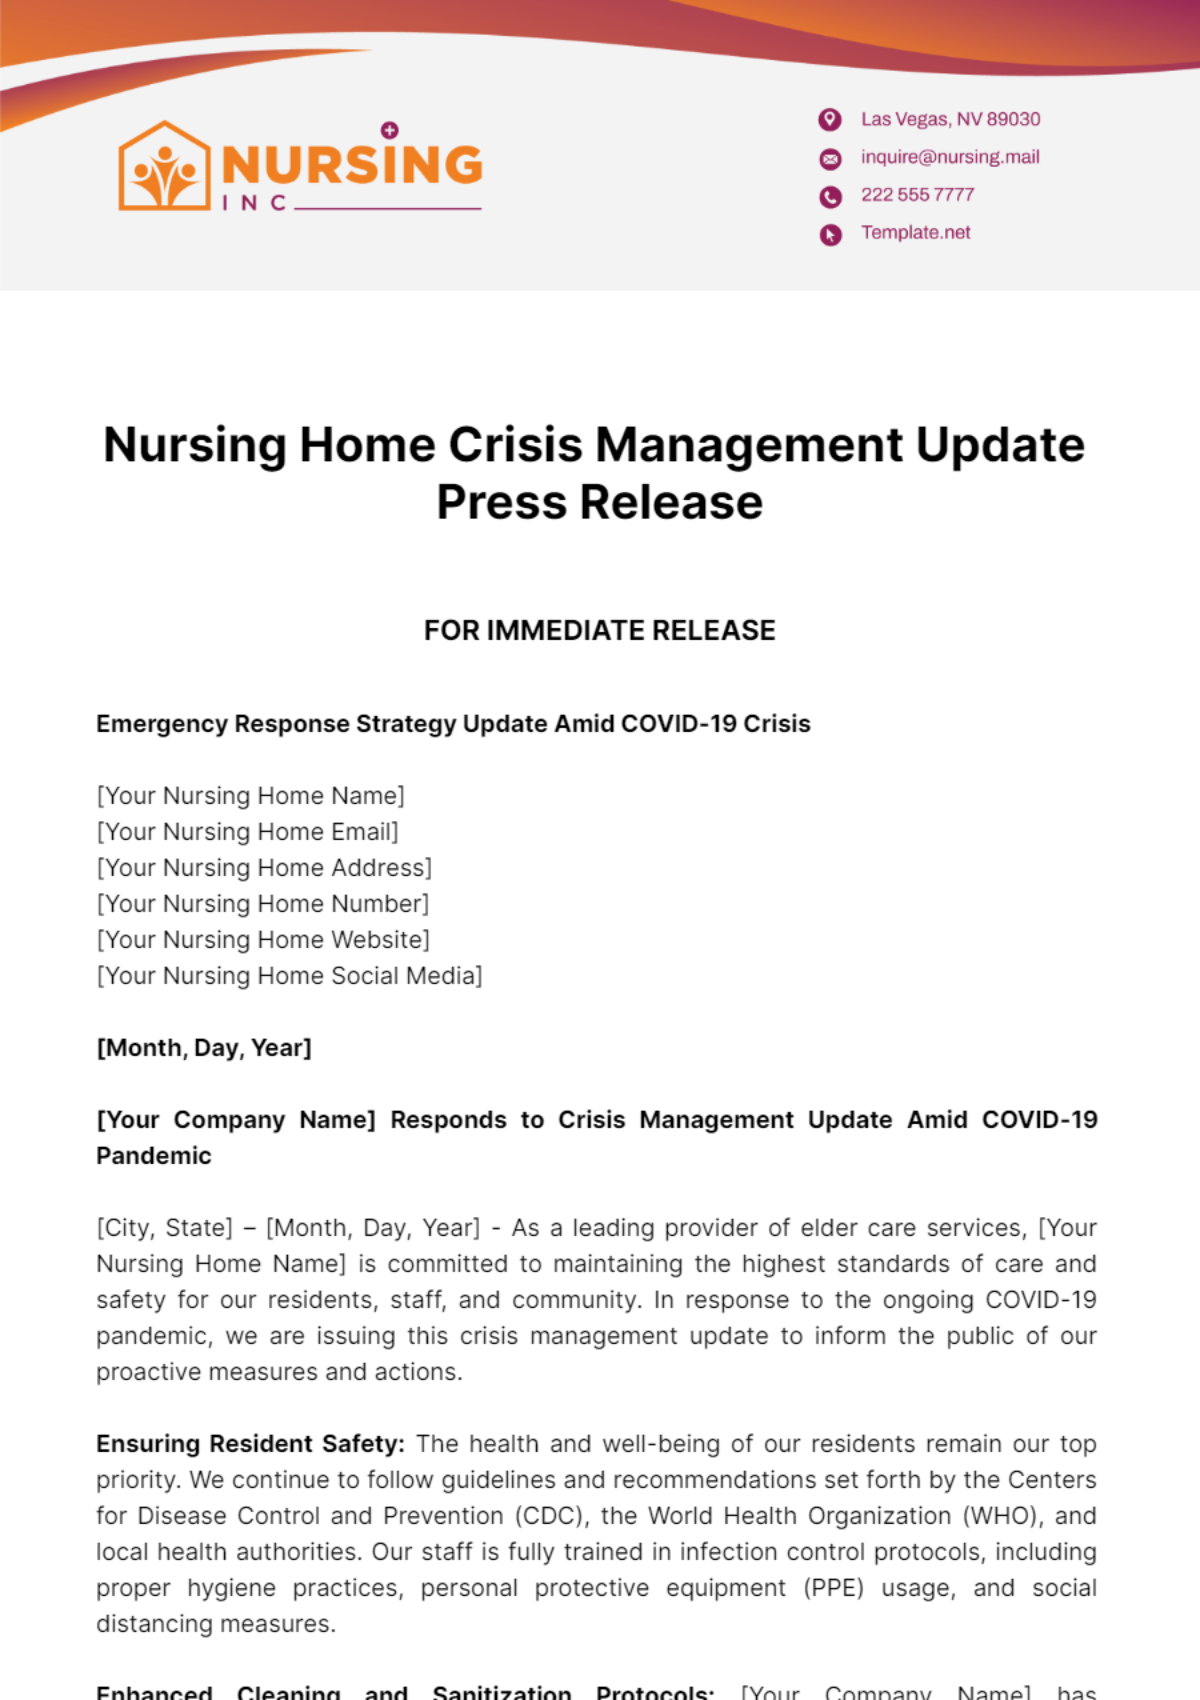 Nursing Home Crisis Management Update Press Release Template